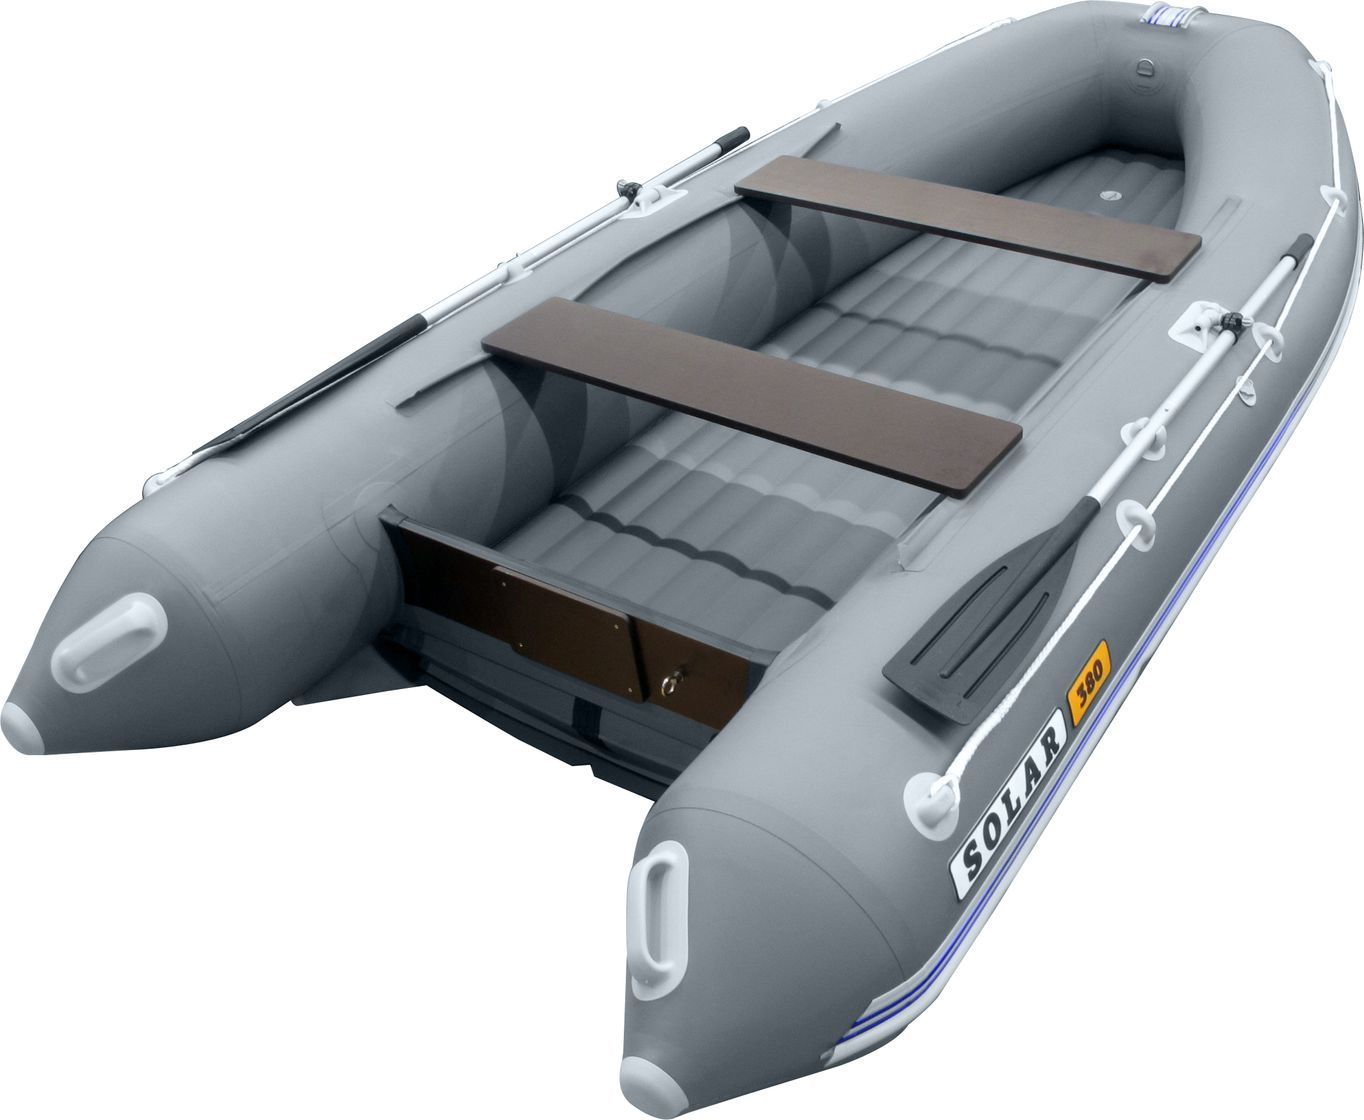 Надувная лодка ПВХ SOLAR-330 К (Оптима), серый SLR330k_opt_grey надувная лодка пвх solar 470 strela jet tunnel рыбка slr470jet strela ribka